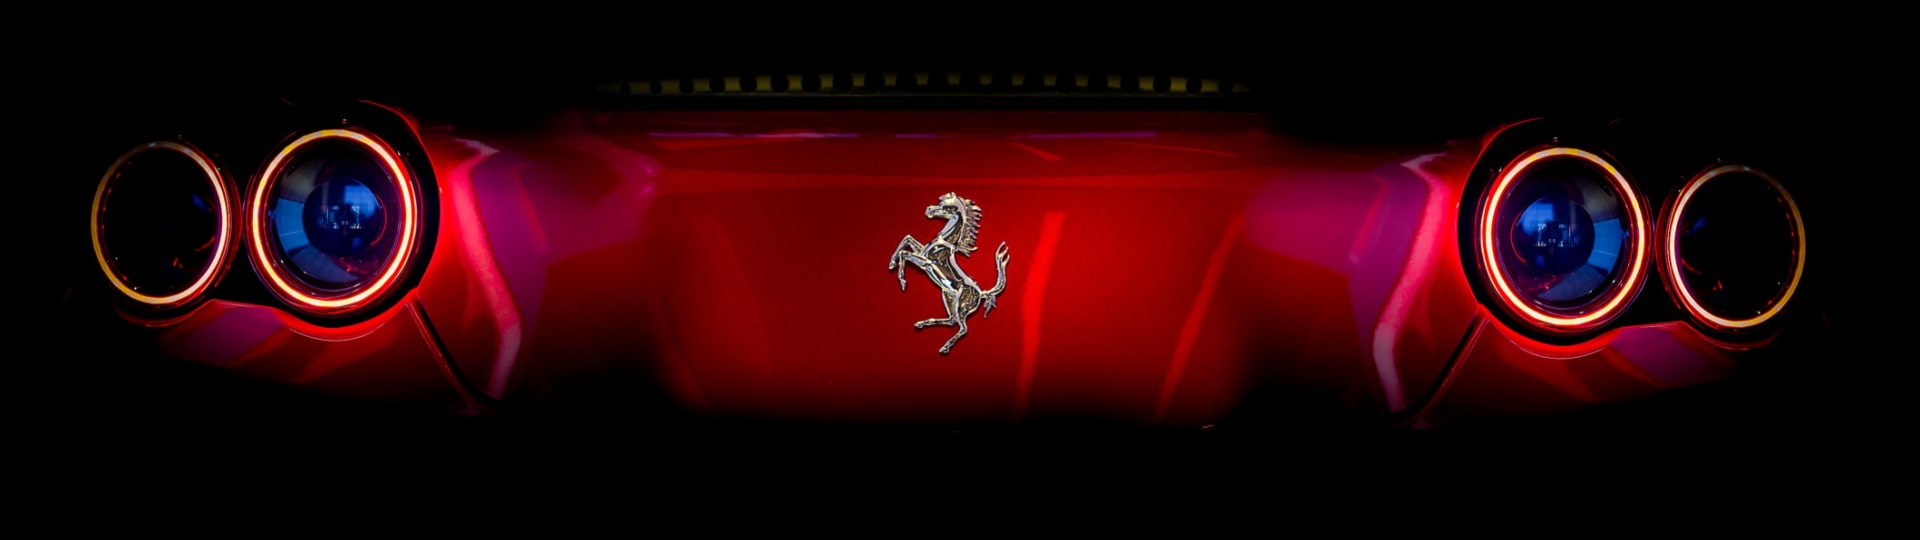 Automobilka Ferrari loni zvýšila hrubý zisk o 16 procent